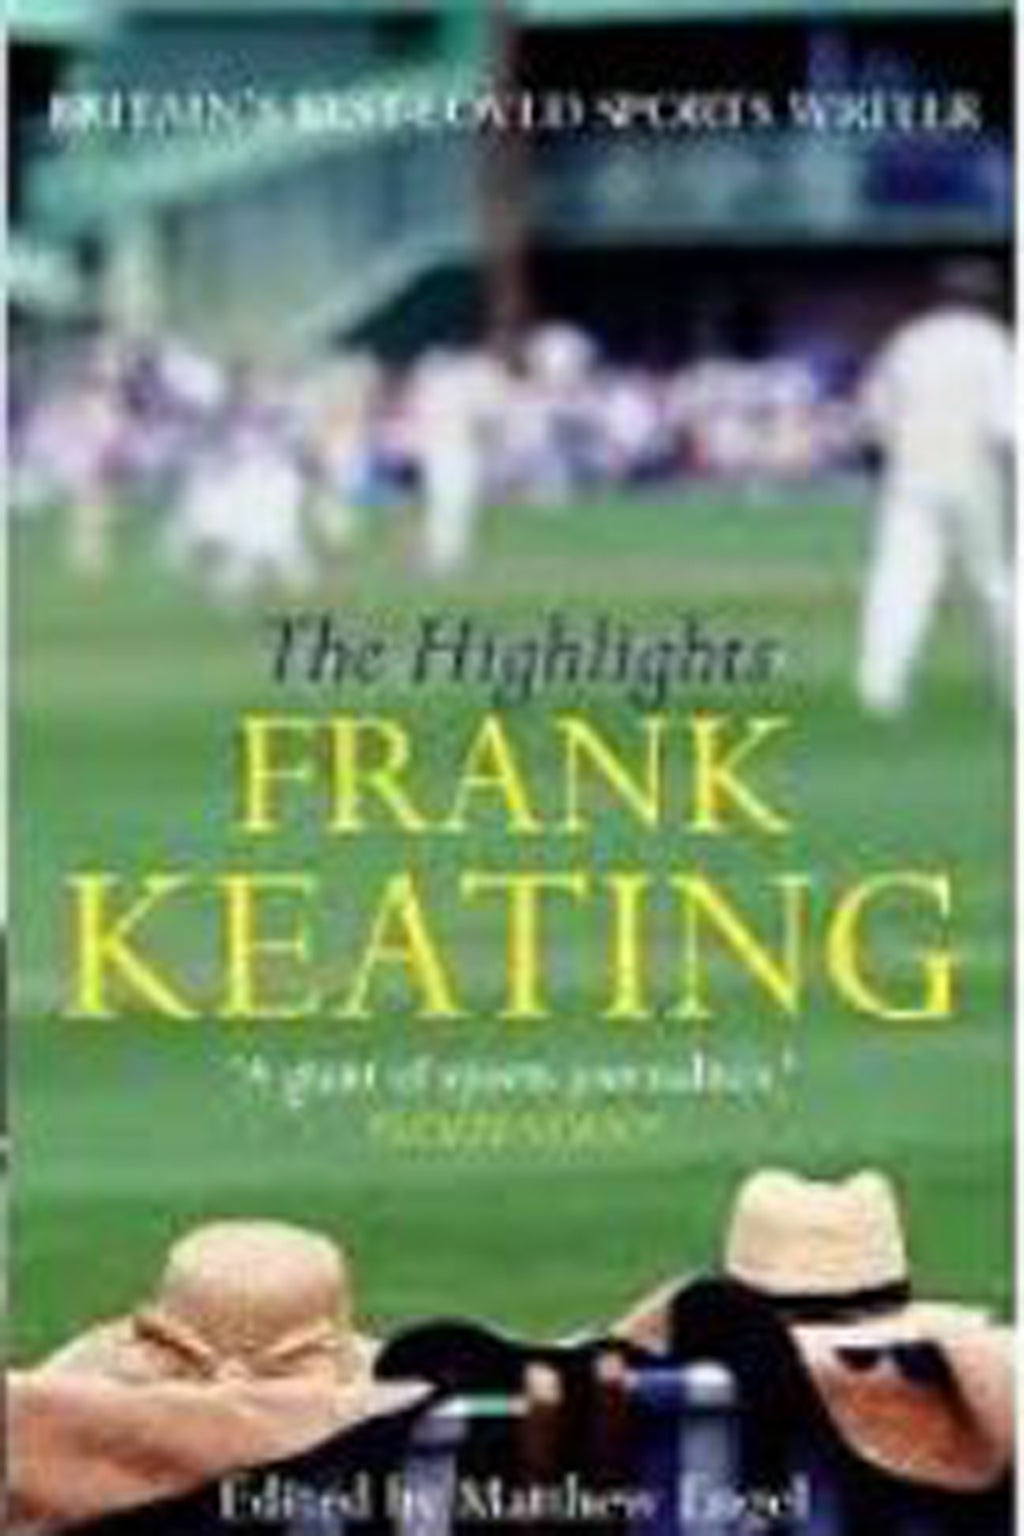 Frank Keating – The Highlights edited by Matthew Engel